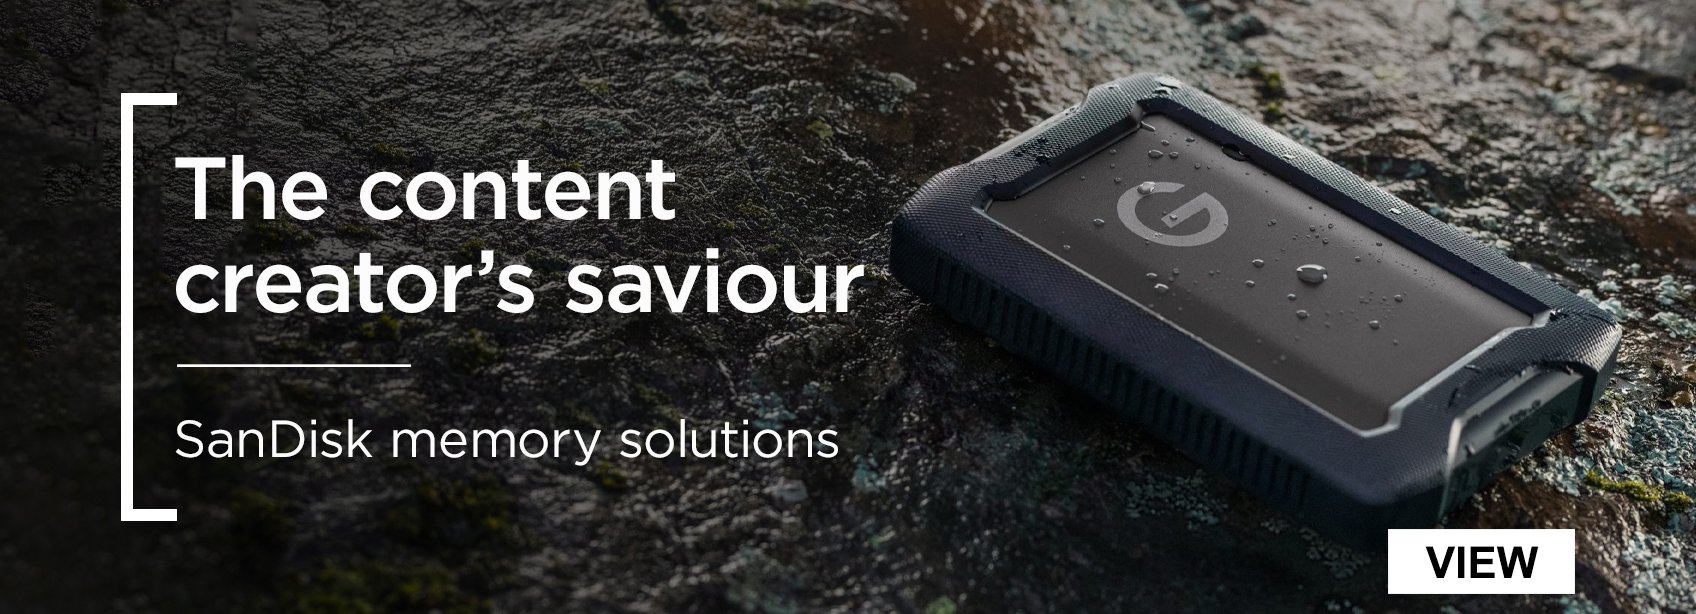 the content creator's savior. Sandisk memory solutions